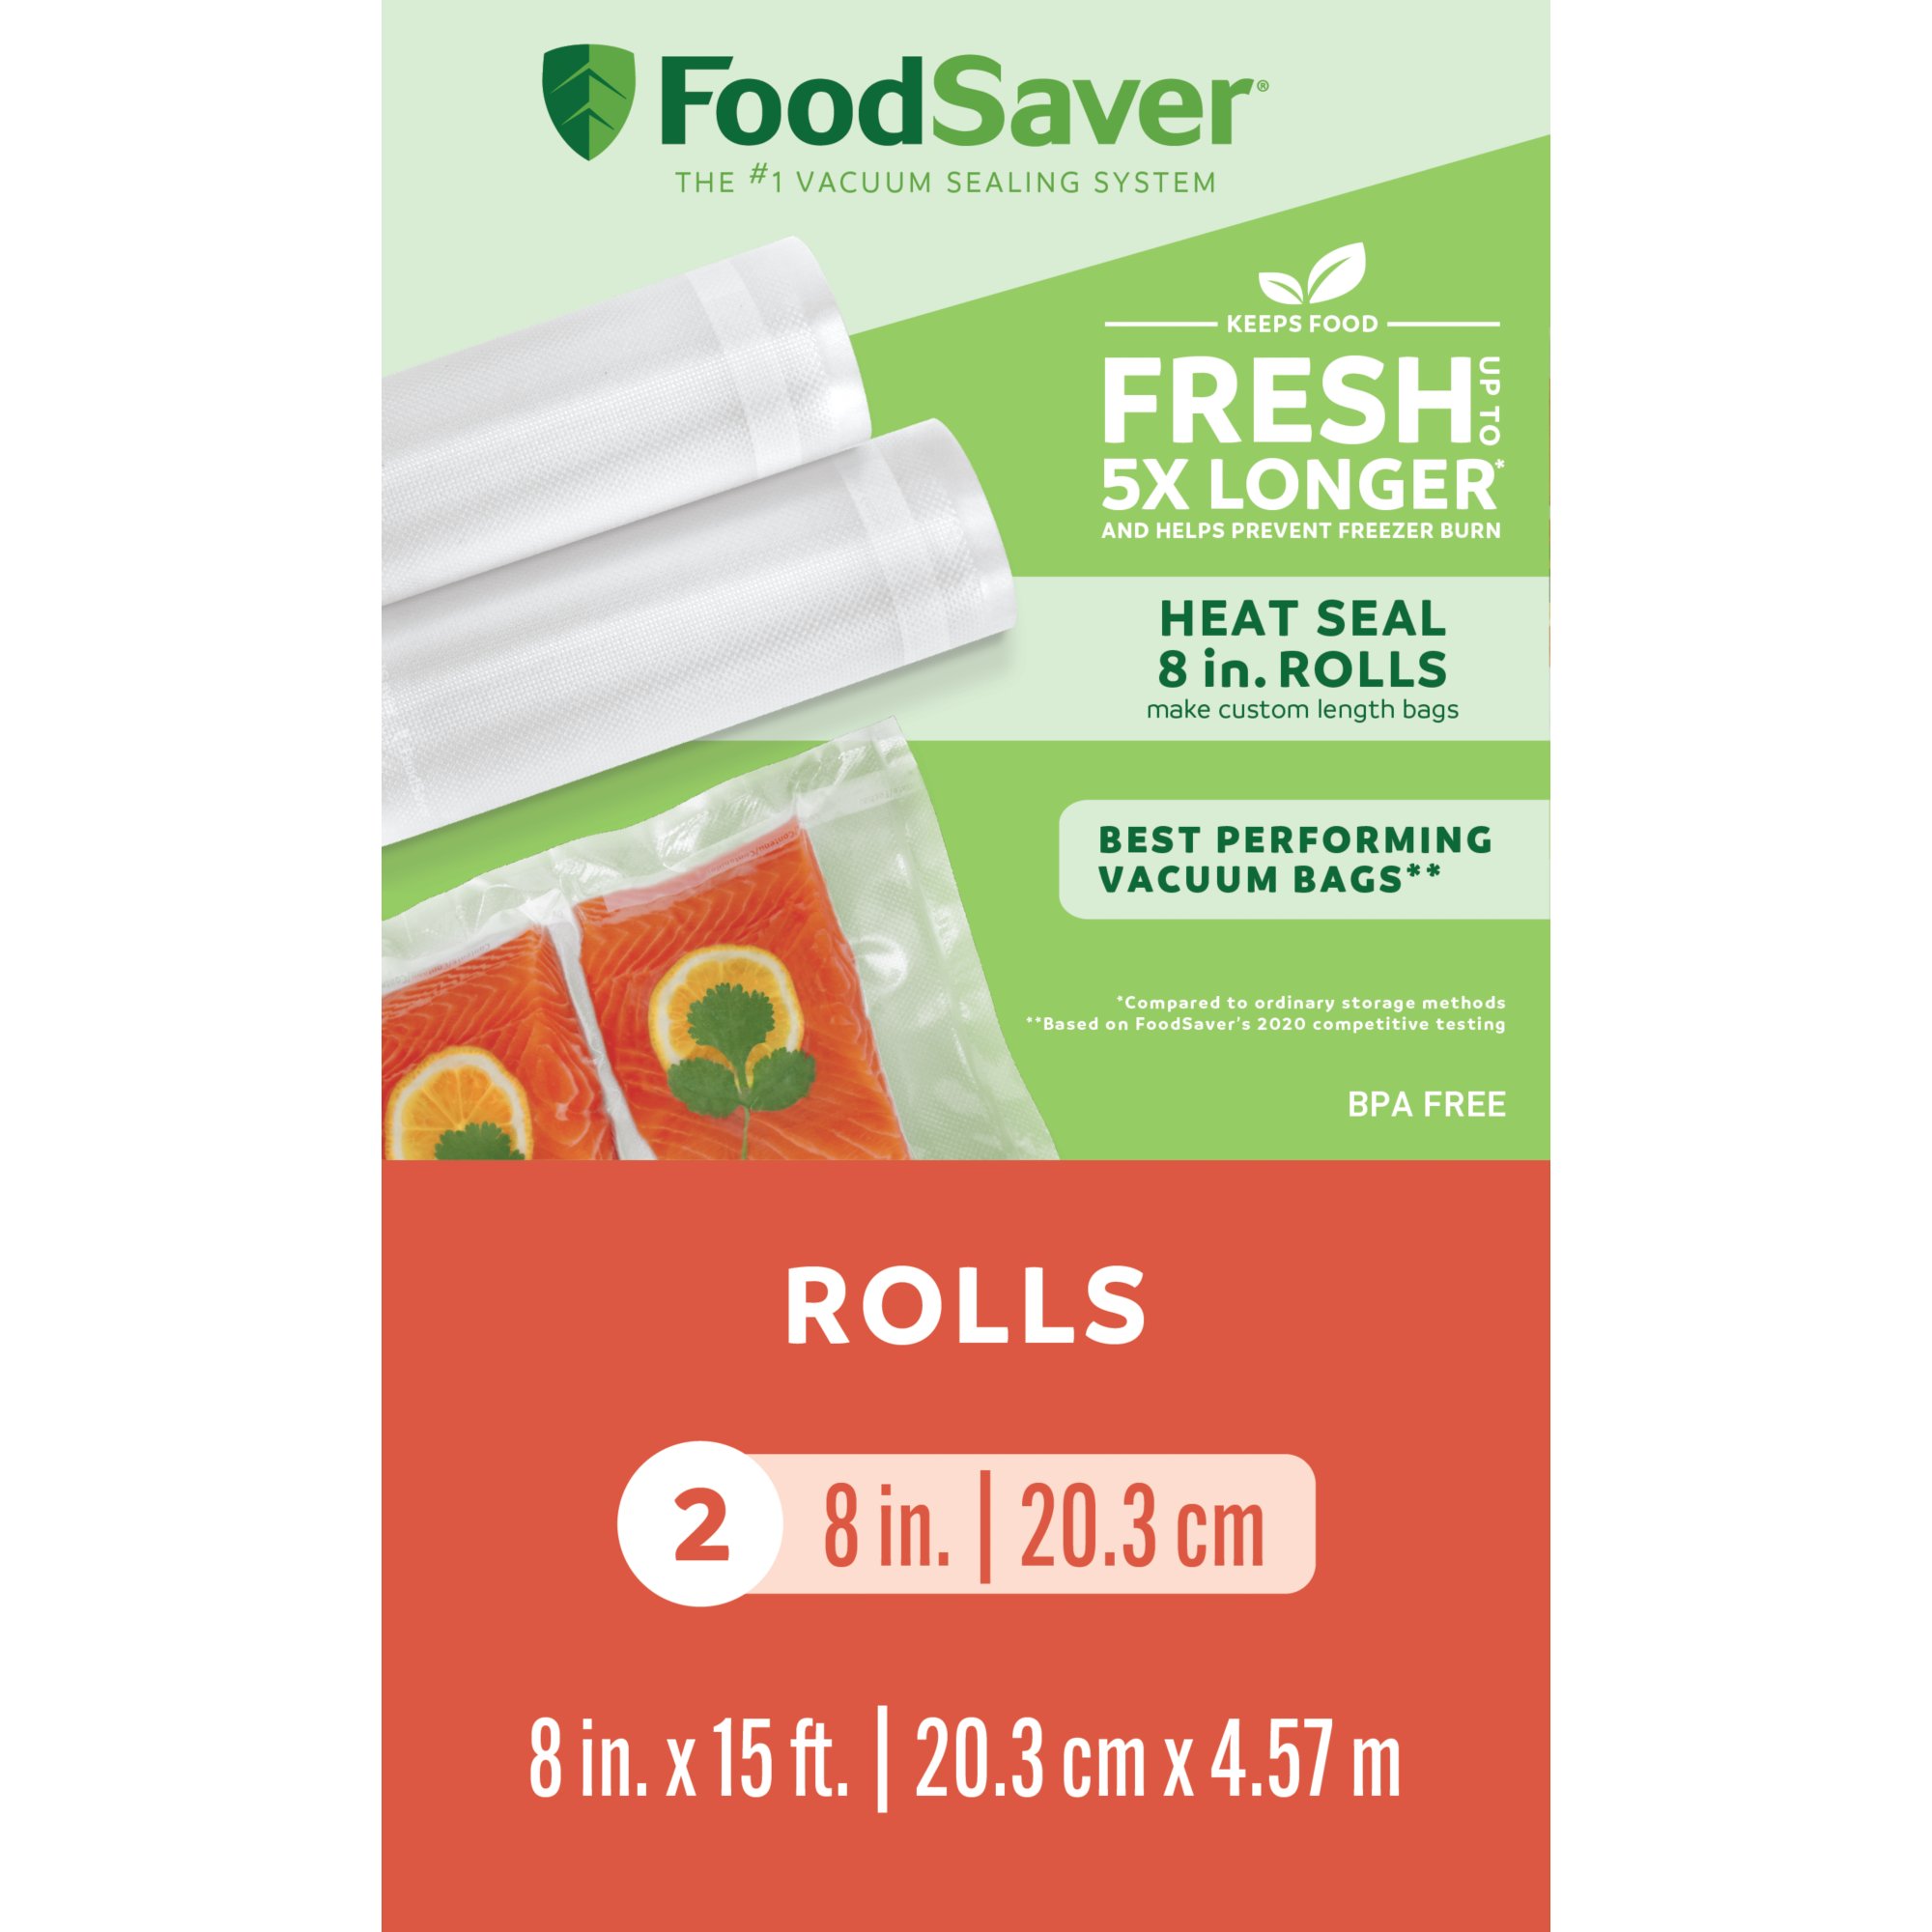 Foodsaver 8 x 20' Vacuum Seal Roll - 3 Pack